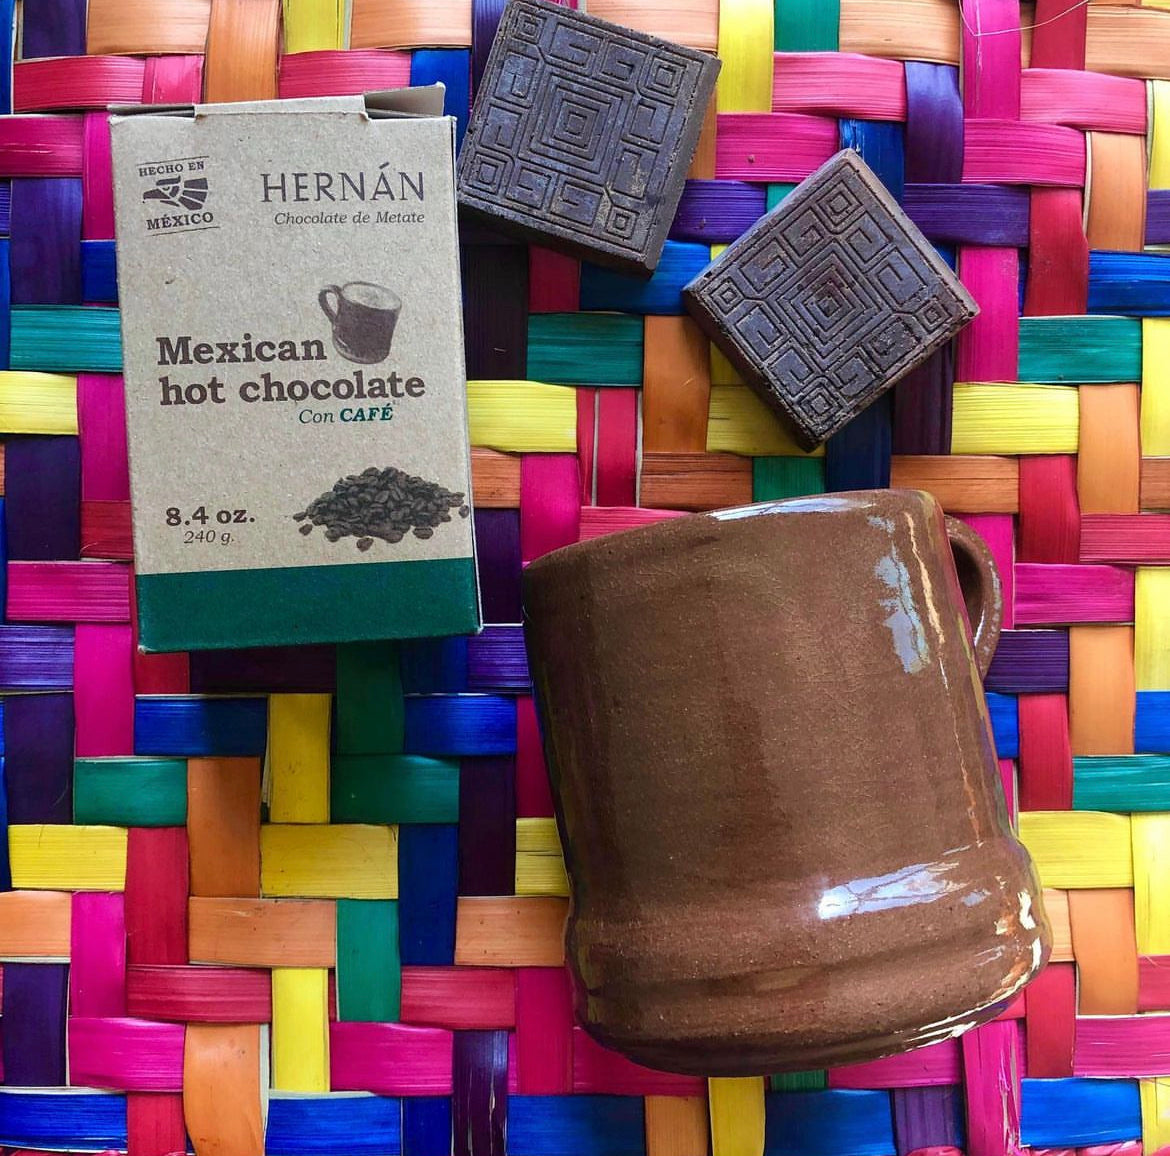 Chiapas Mexican Hot Chocolate "con cafe" Tablillas